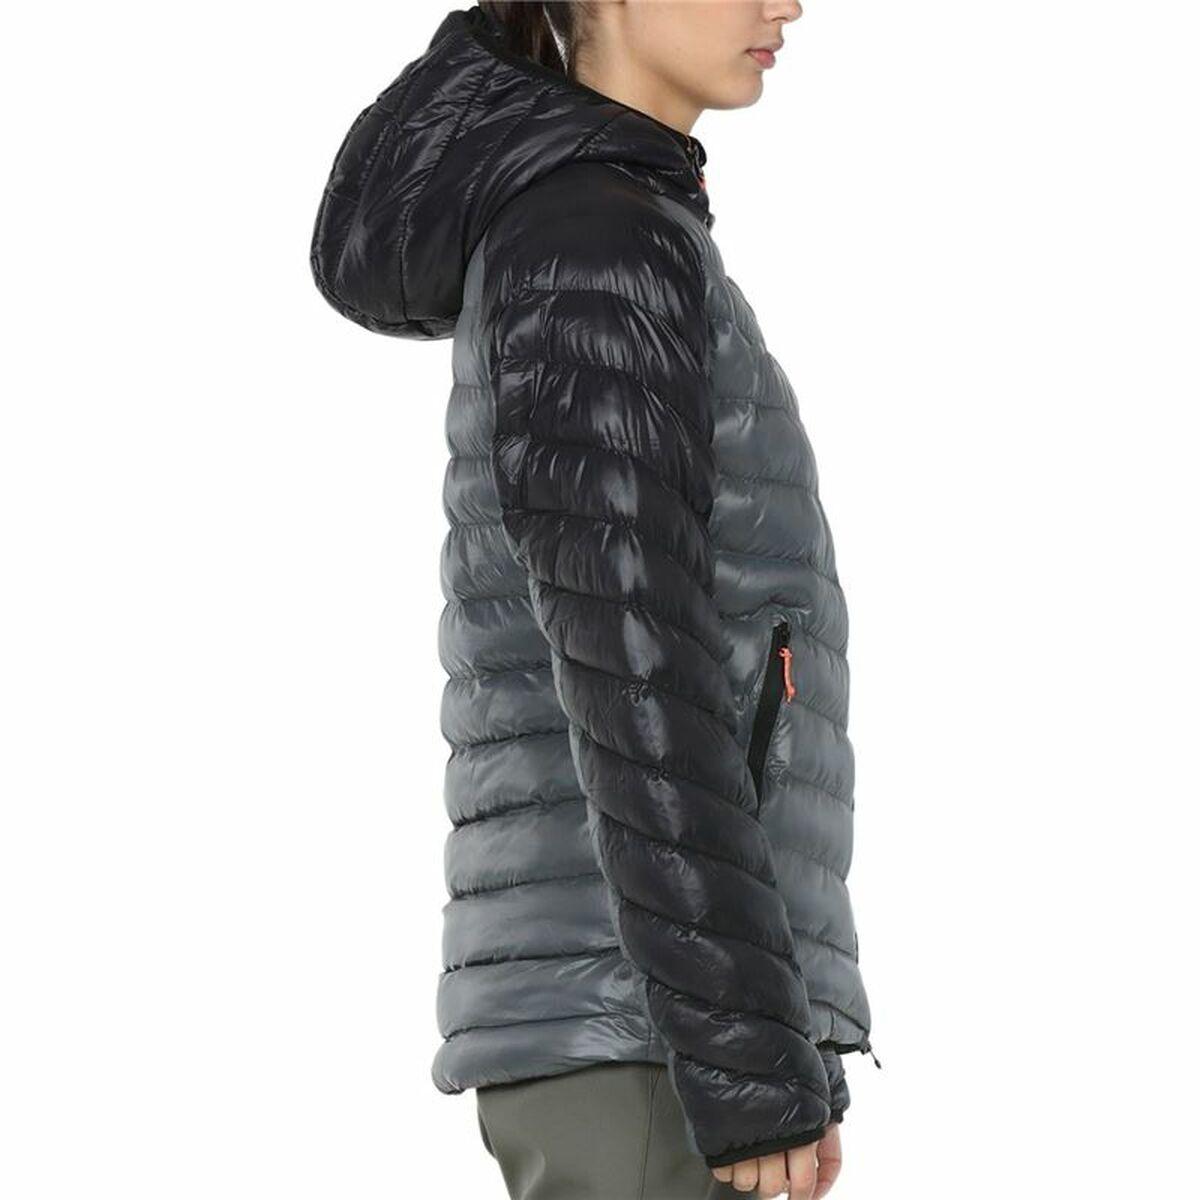 Women's Sports Jacket +8000 Exora Grey Black - VirtuousWares:Global